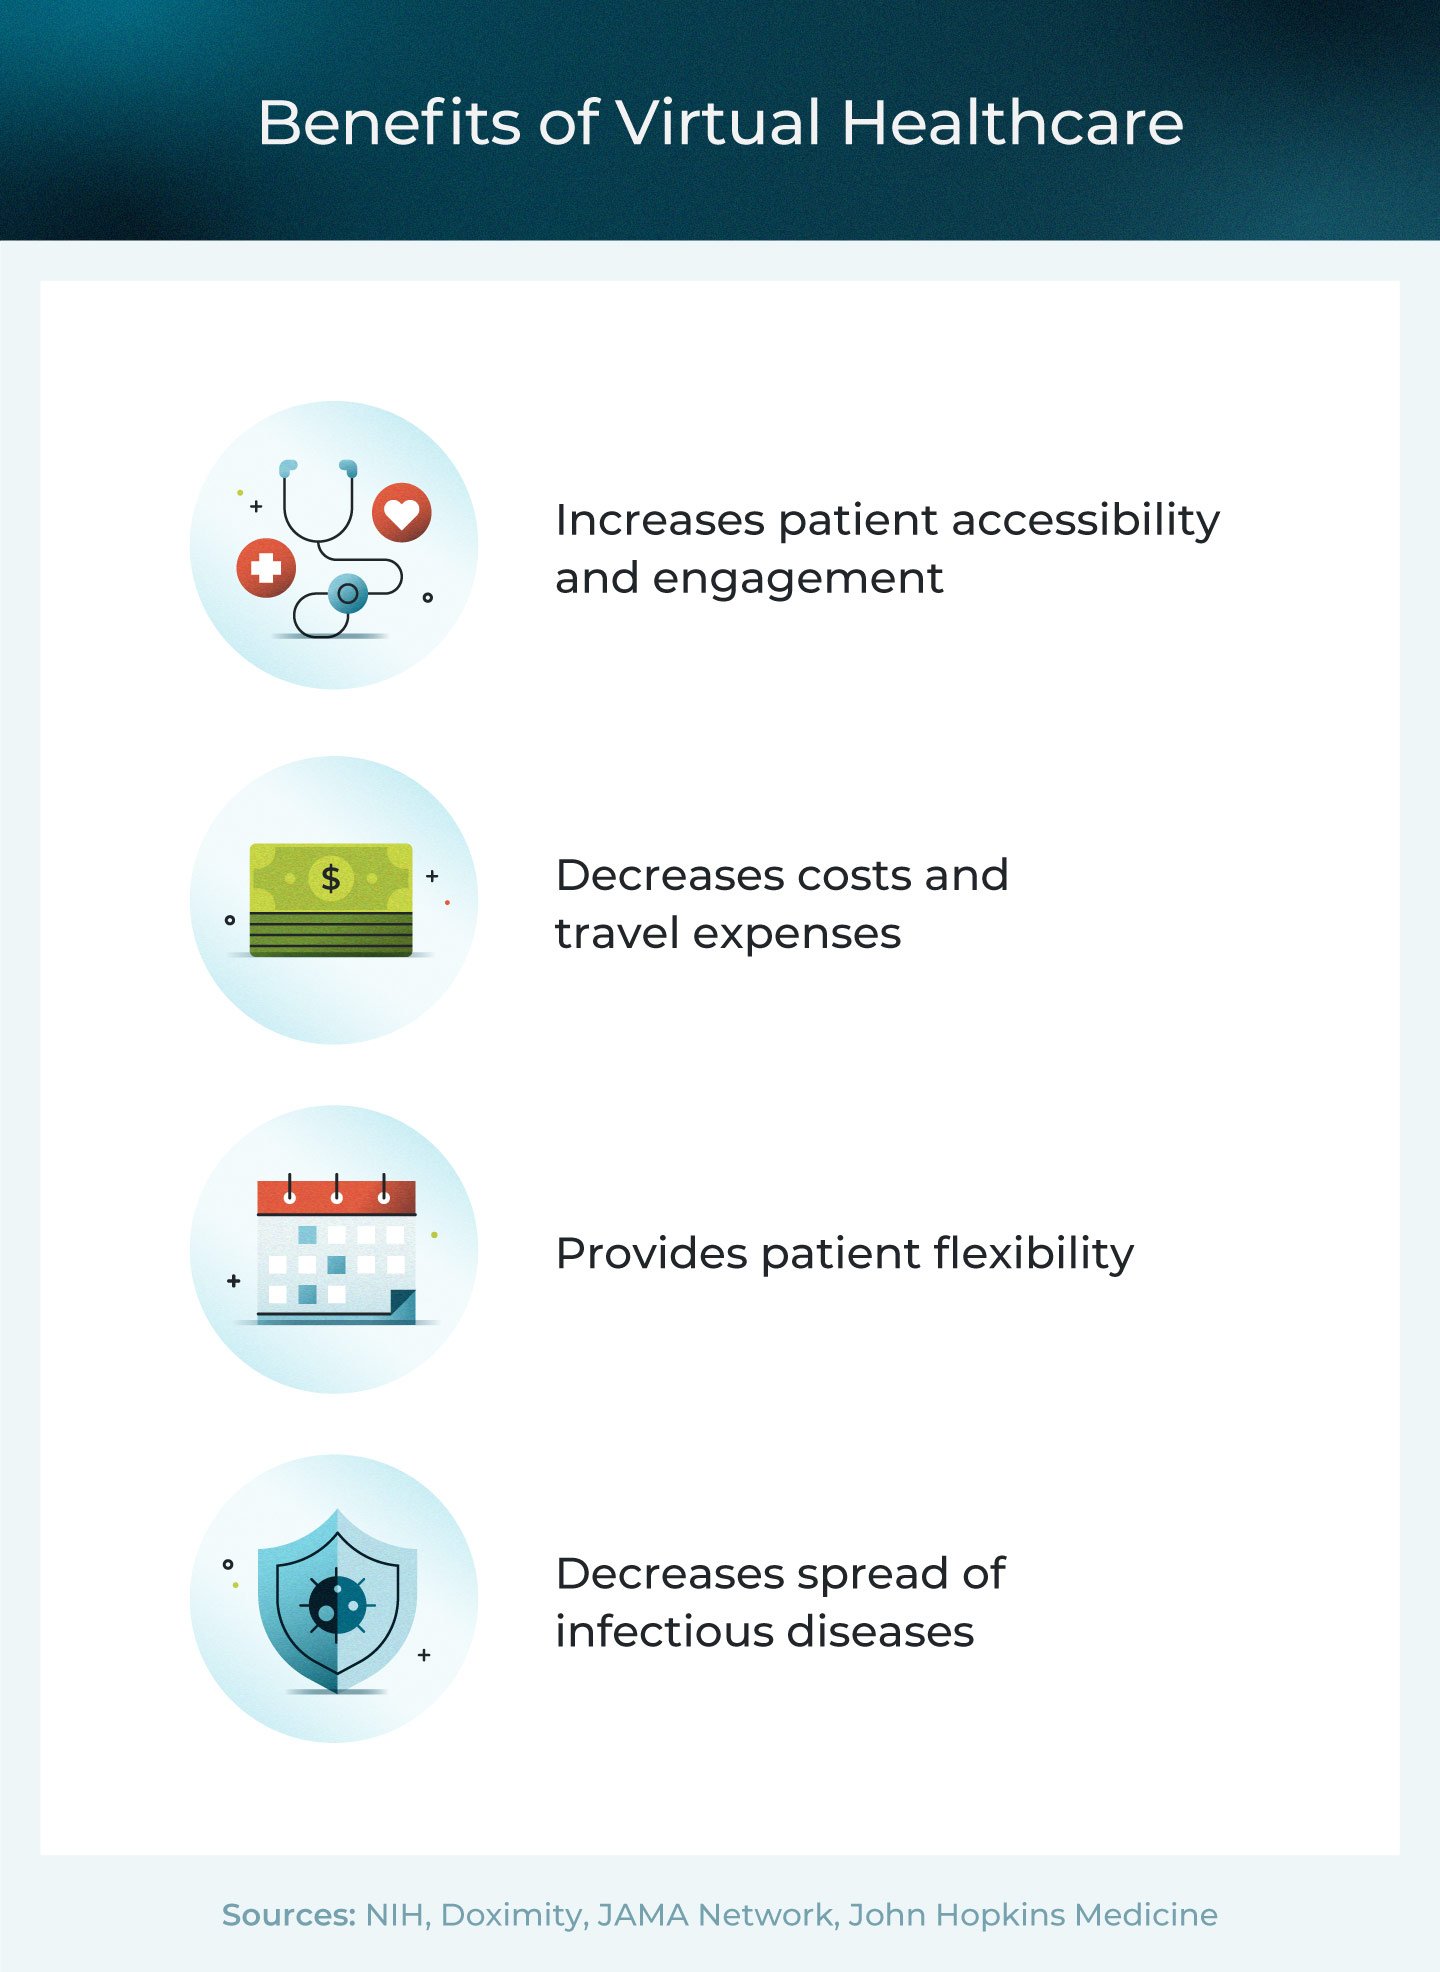 Benefits of virtual healthcare.